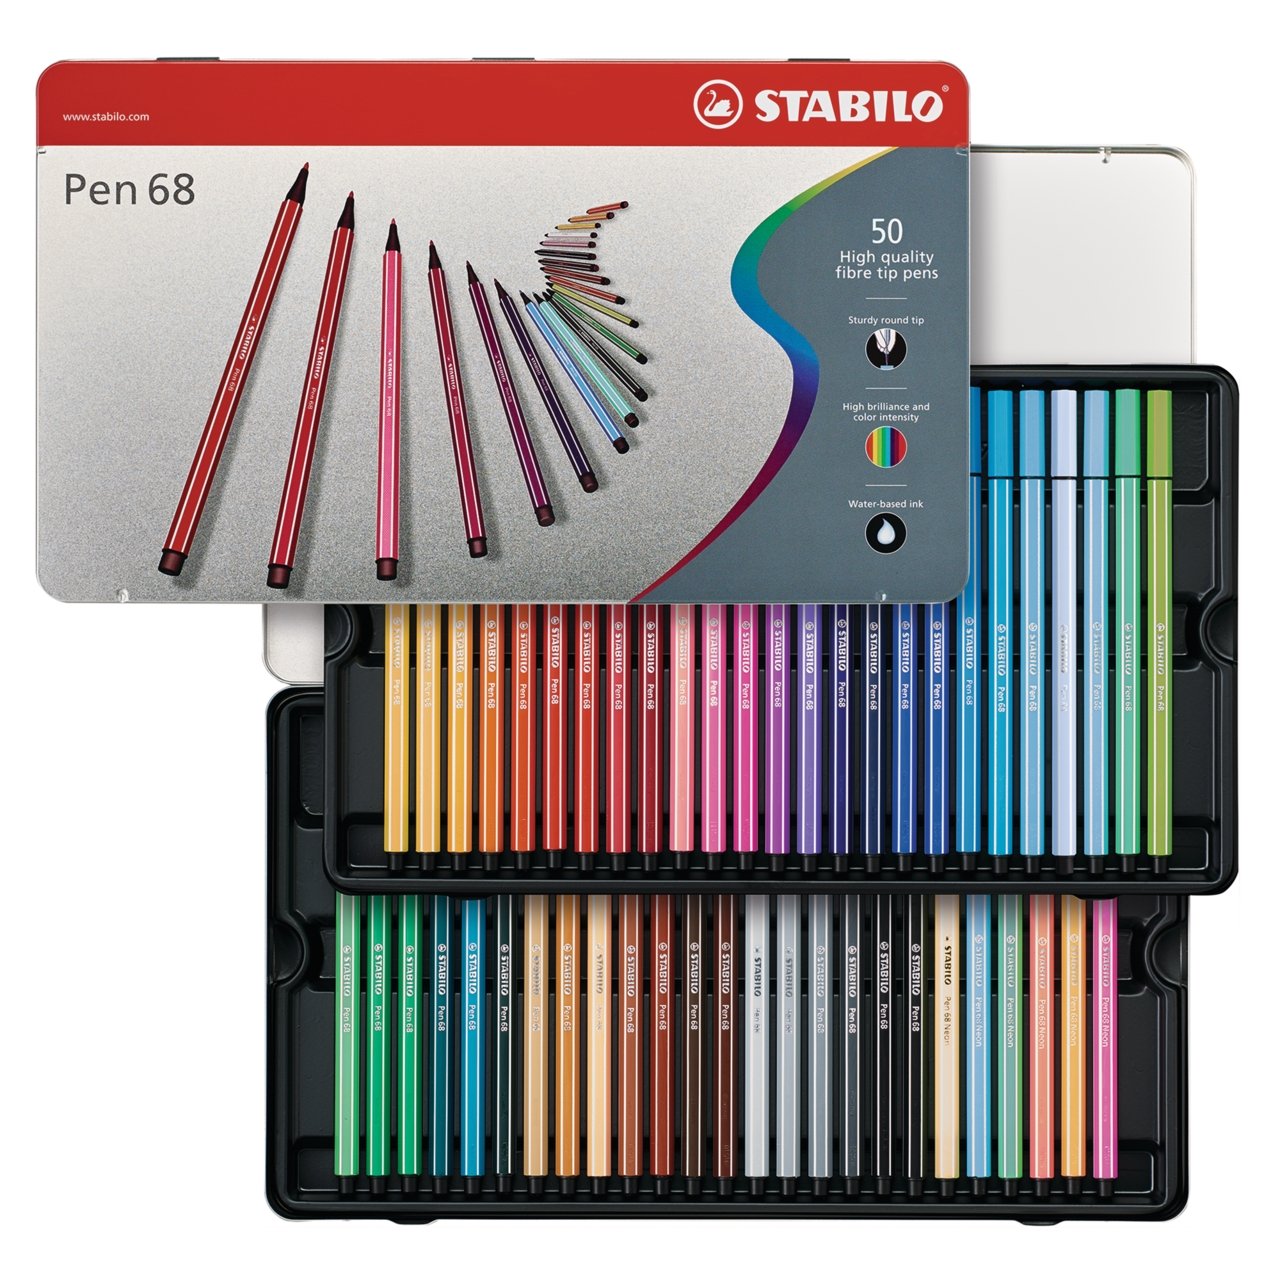 Wedstrijd Prime letterlijk Stabilo Pen 68 Marker Set Metal Box Set of 50 - merriartist.com